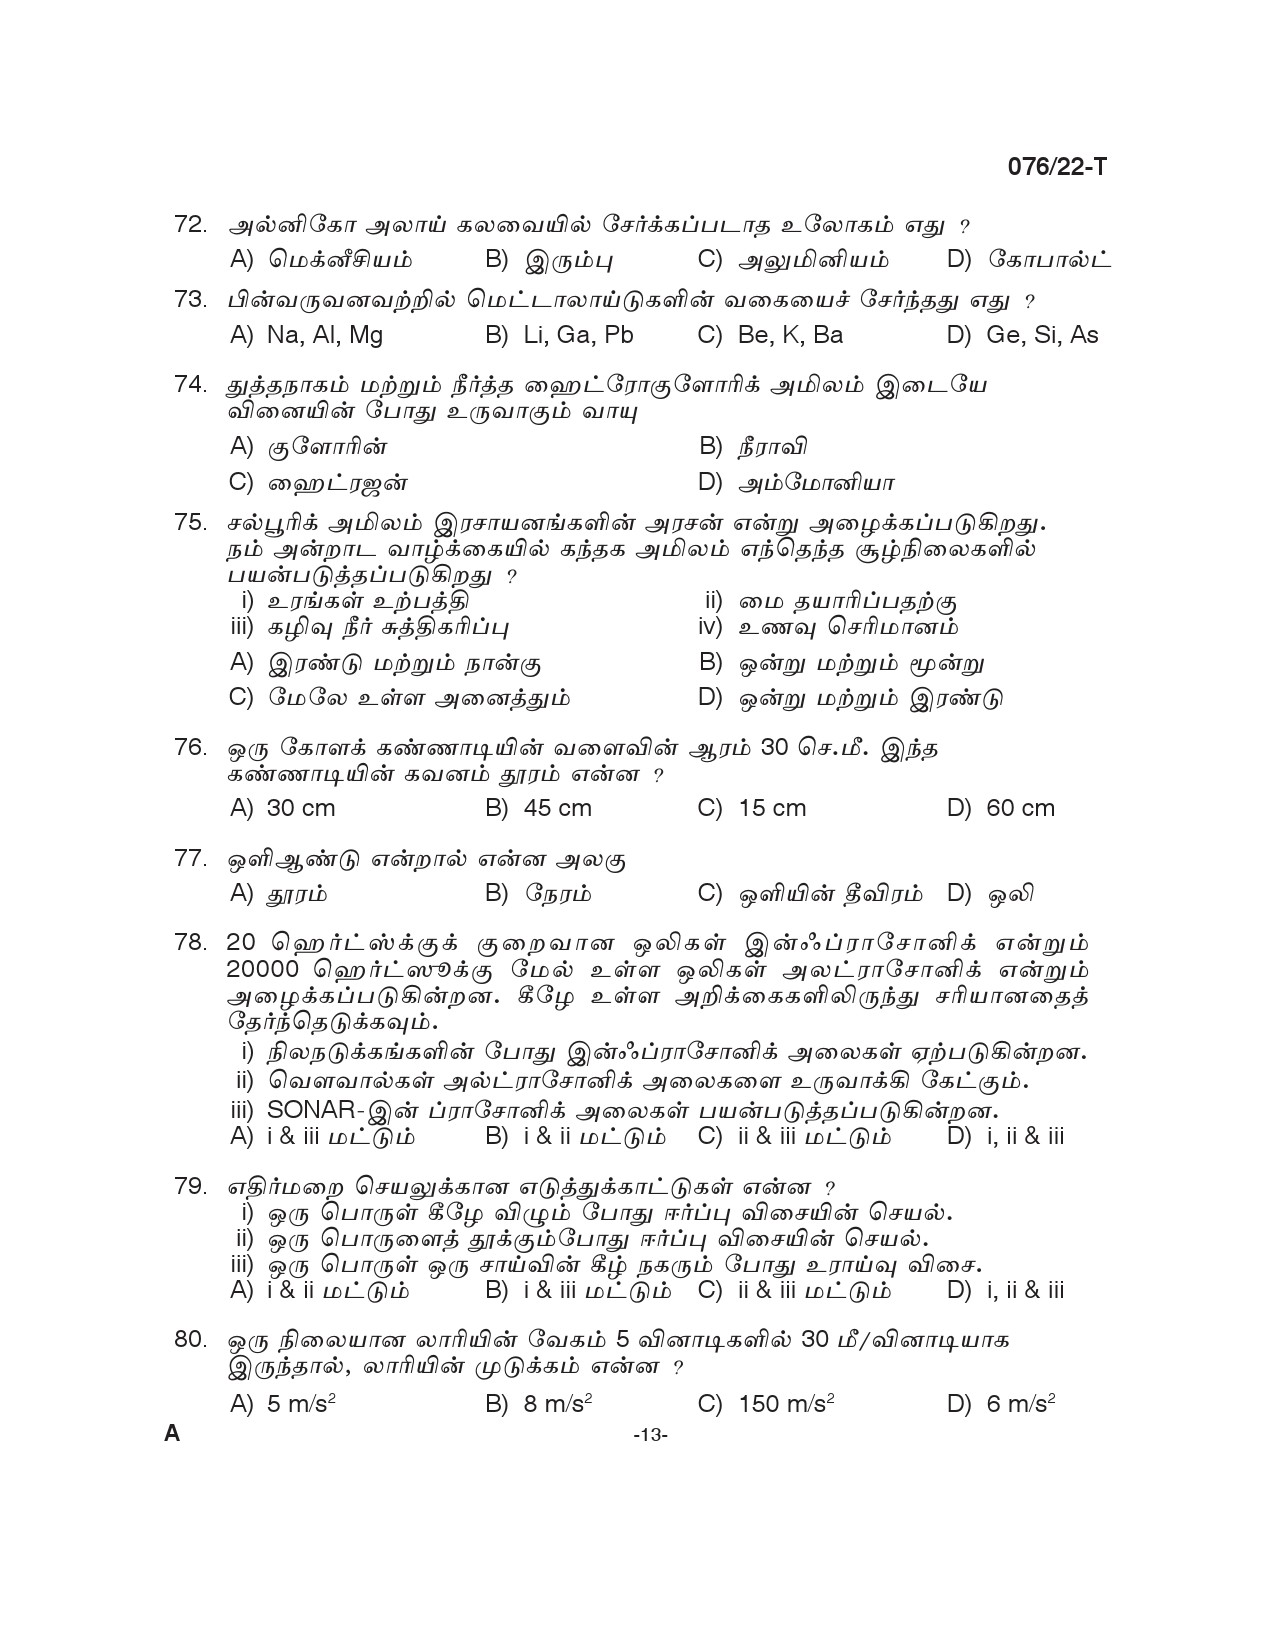 Common Preliminary Exam 2022 Upto SSLC Level Stage V Tamil 0762022 T 12